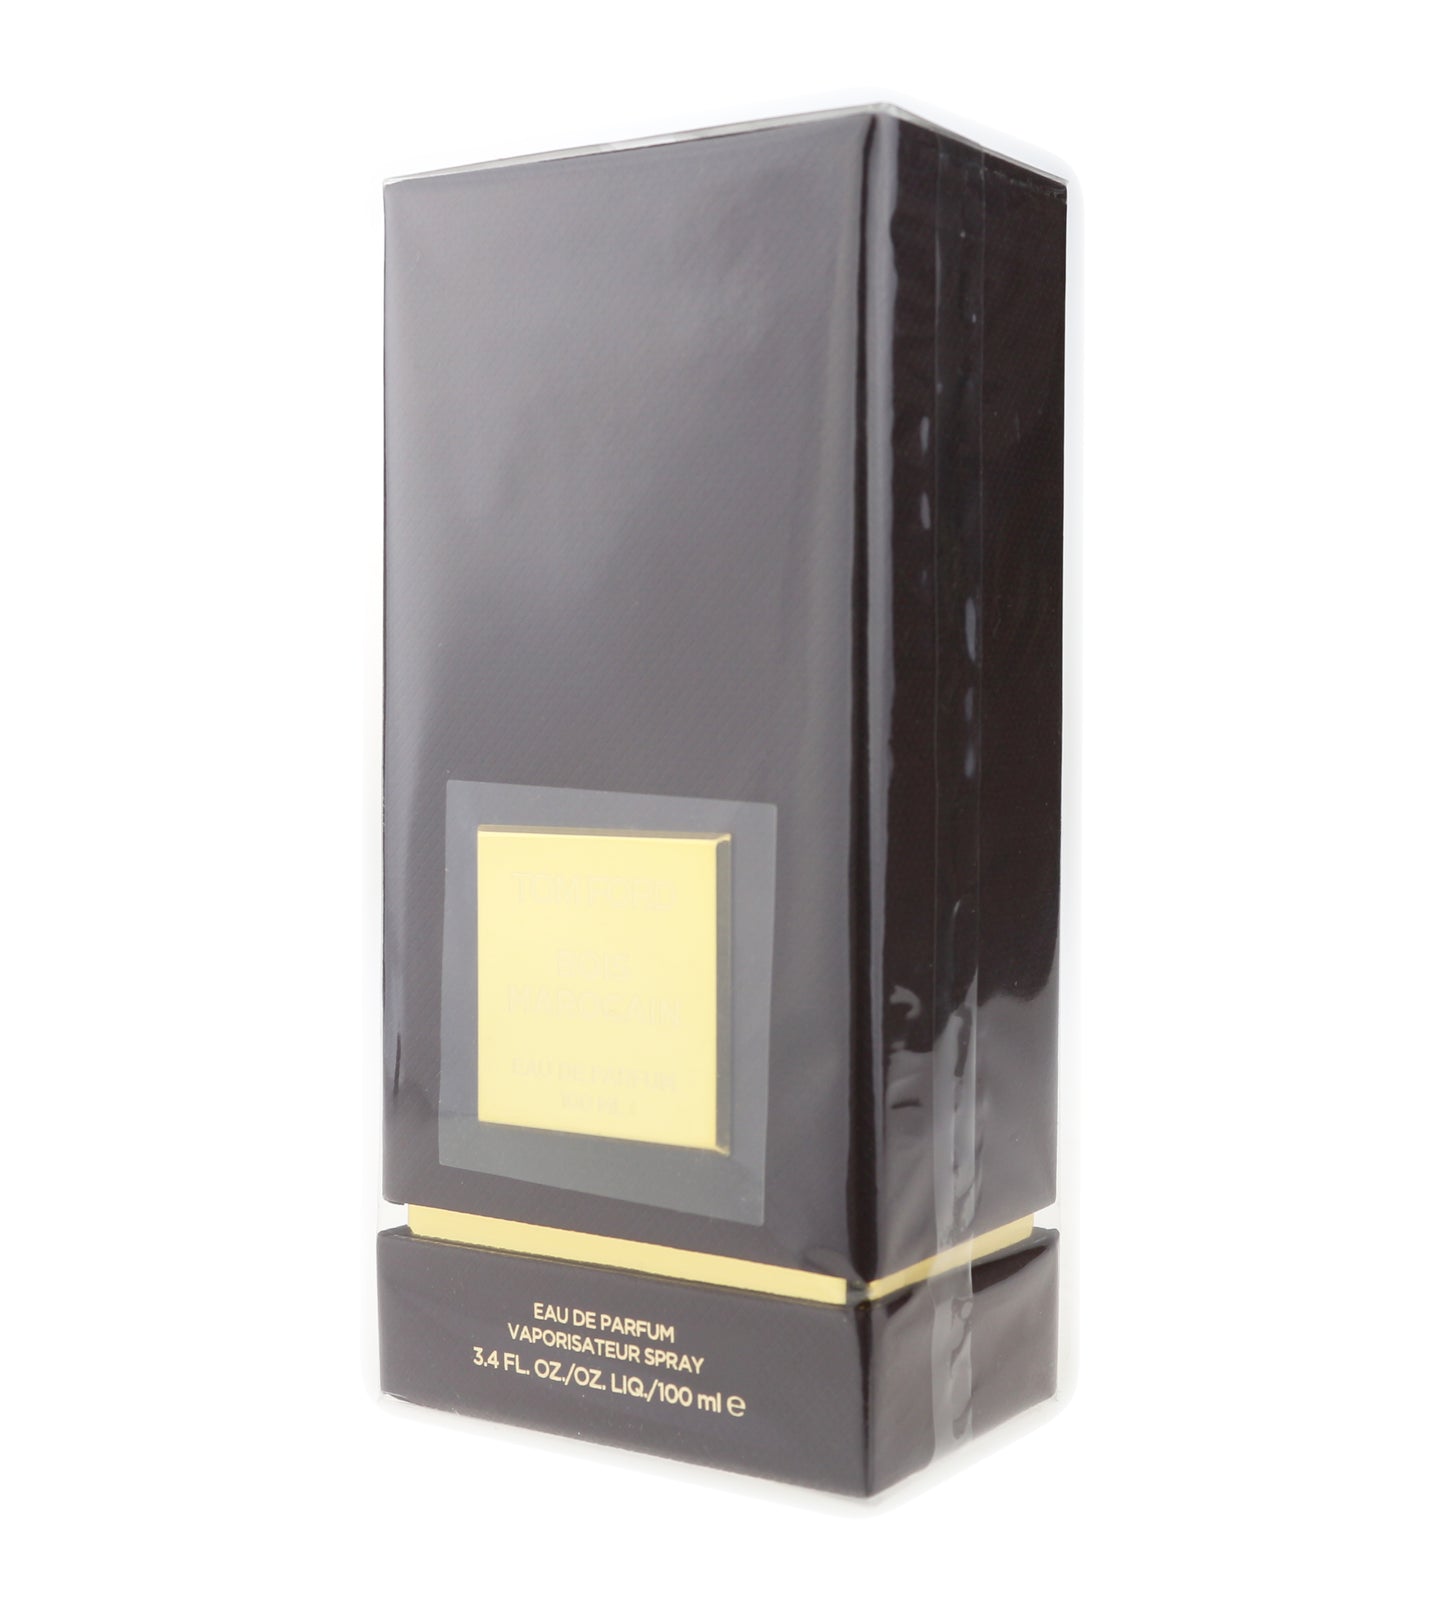 Tom Ford 'Bois Marocain' Eau De Parfum 3.4oz/100ml New In Box